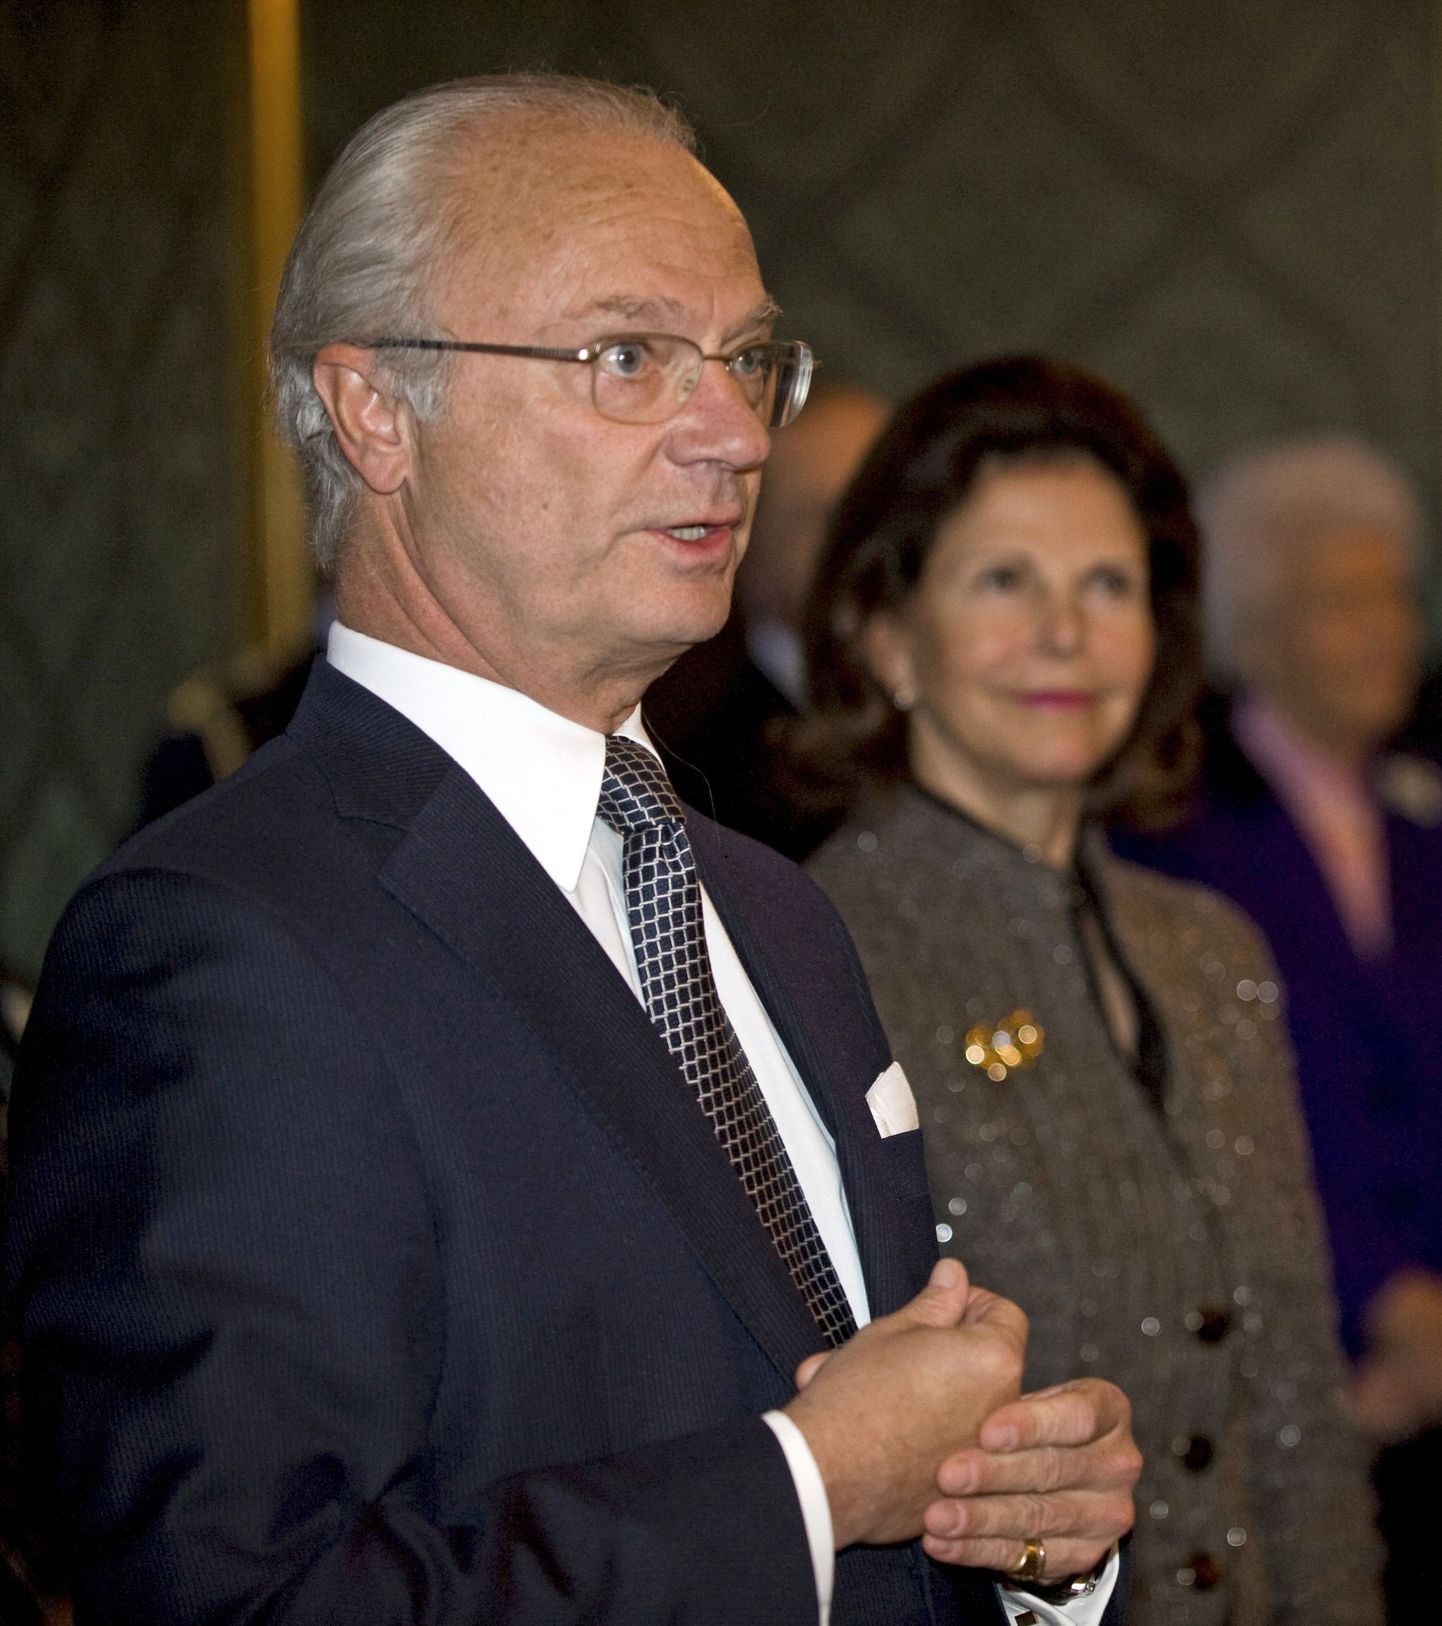 Rootsi kuningas Carl XVI Gustaf jaanuaris koos kuninganna Silviaga.